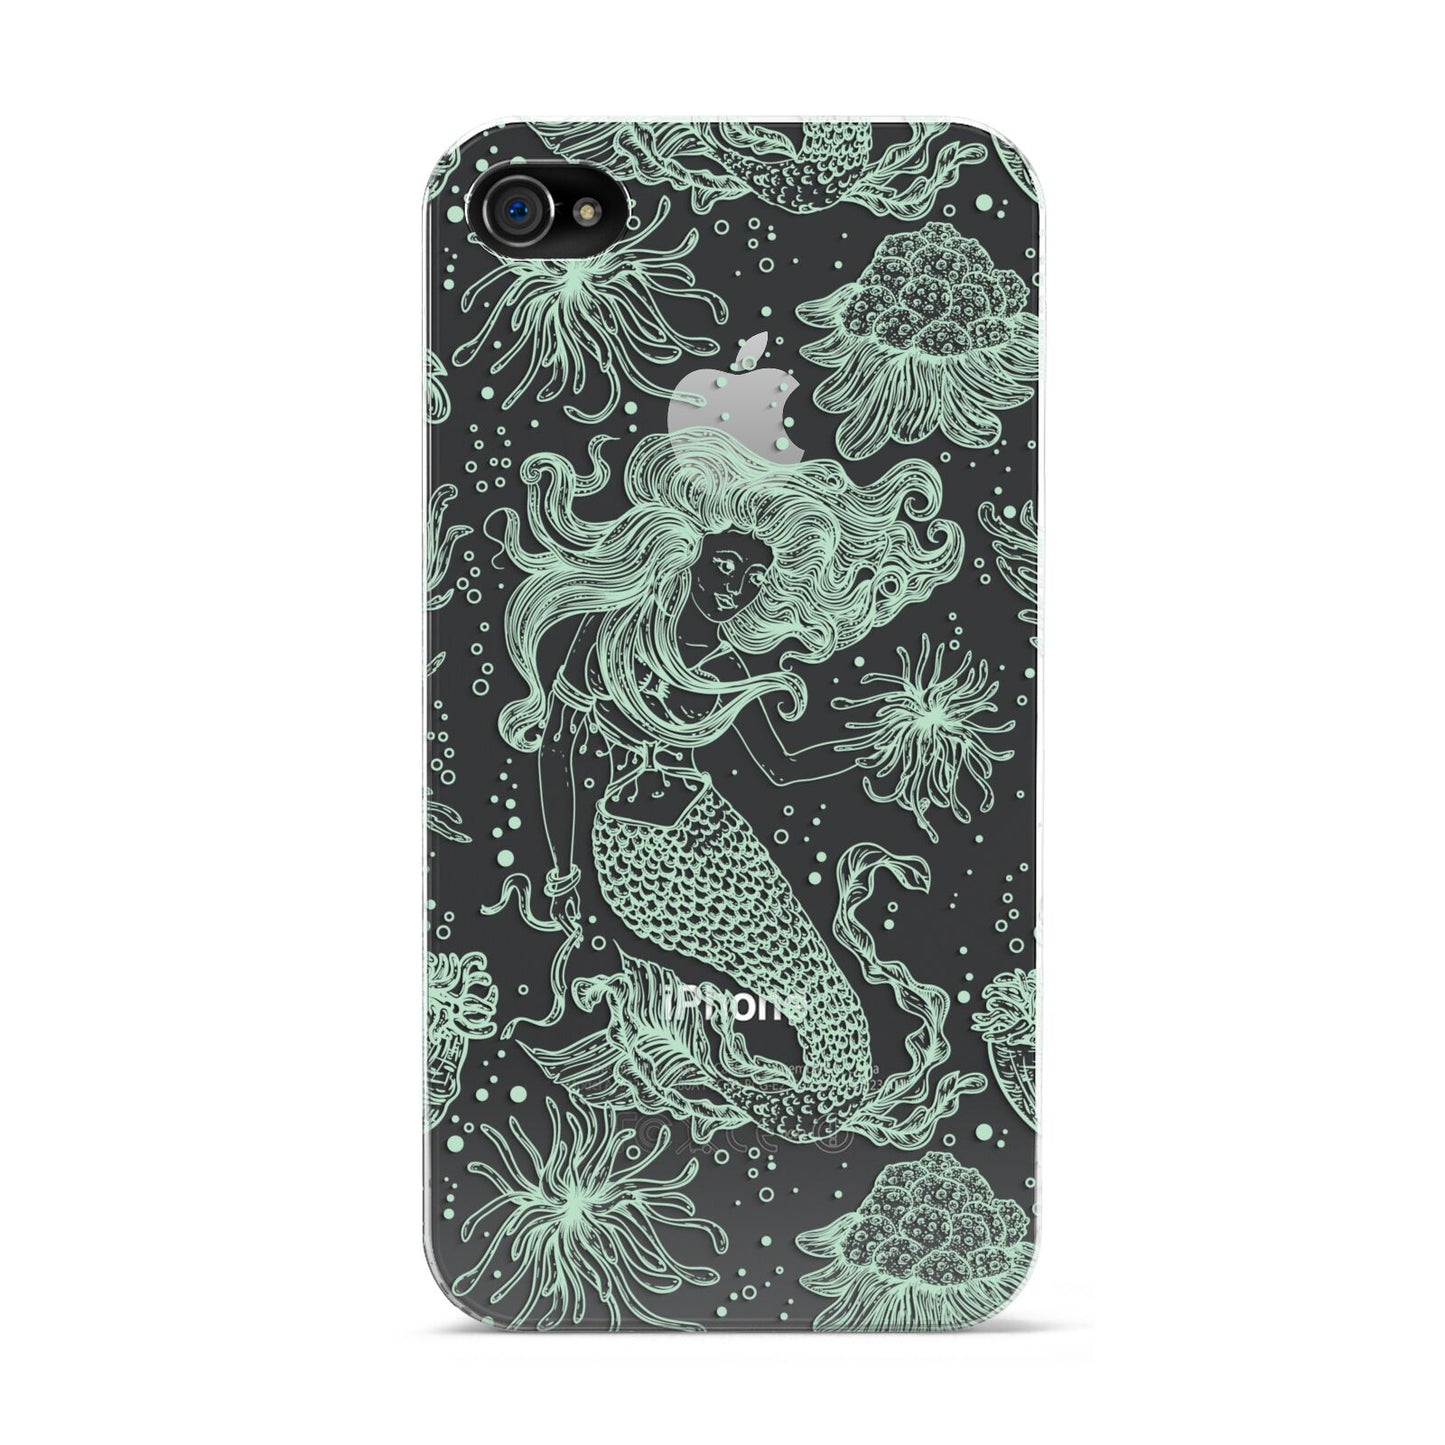 Sea Mermaid Apple iPhone 4s Case